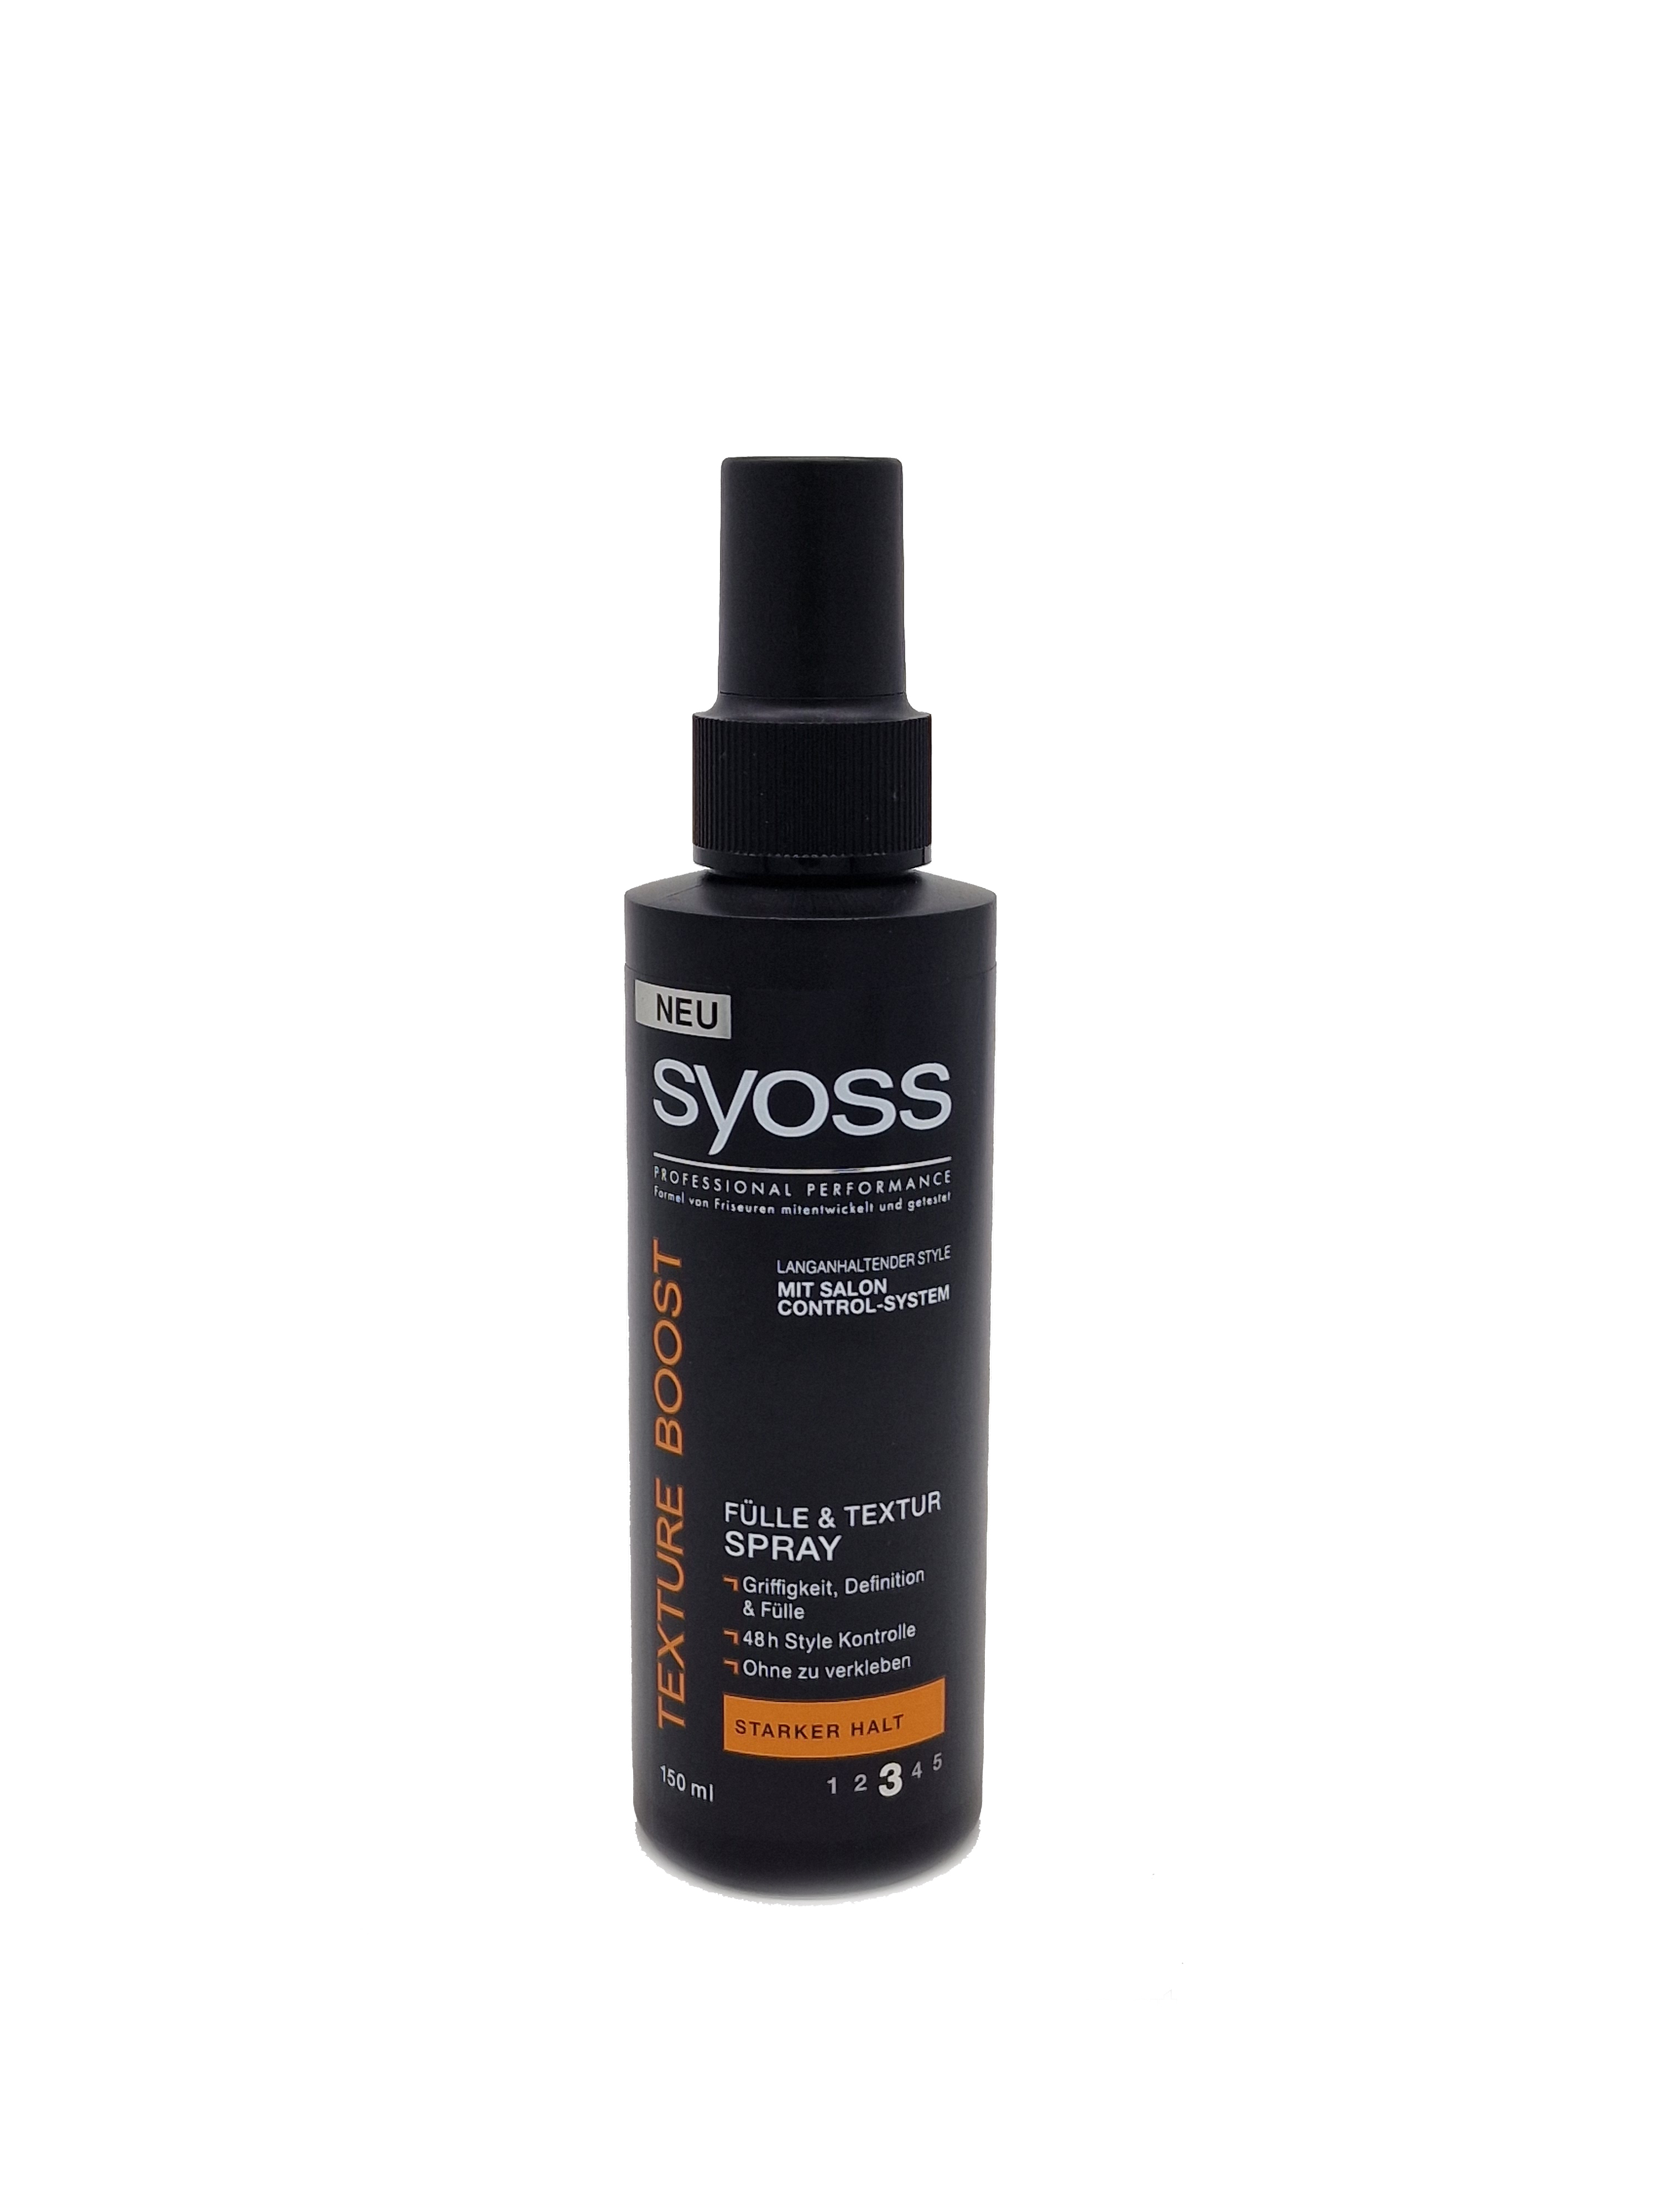 Syoss 150ml Texture Boost Spray